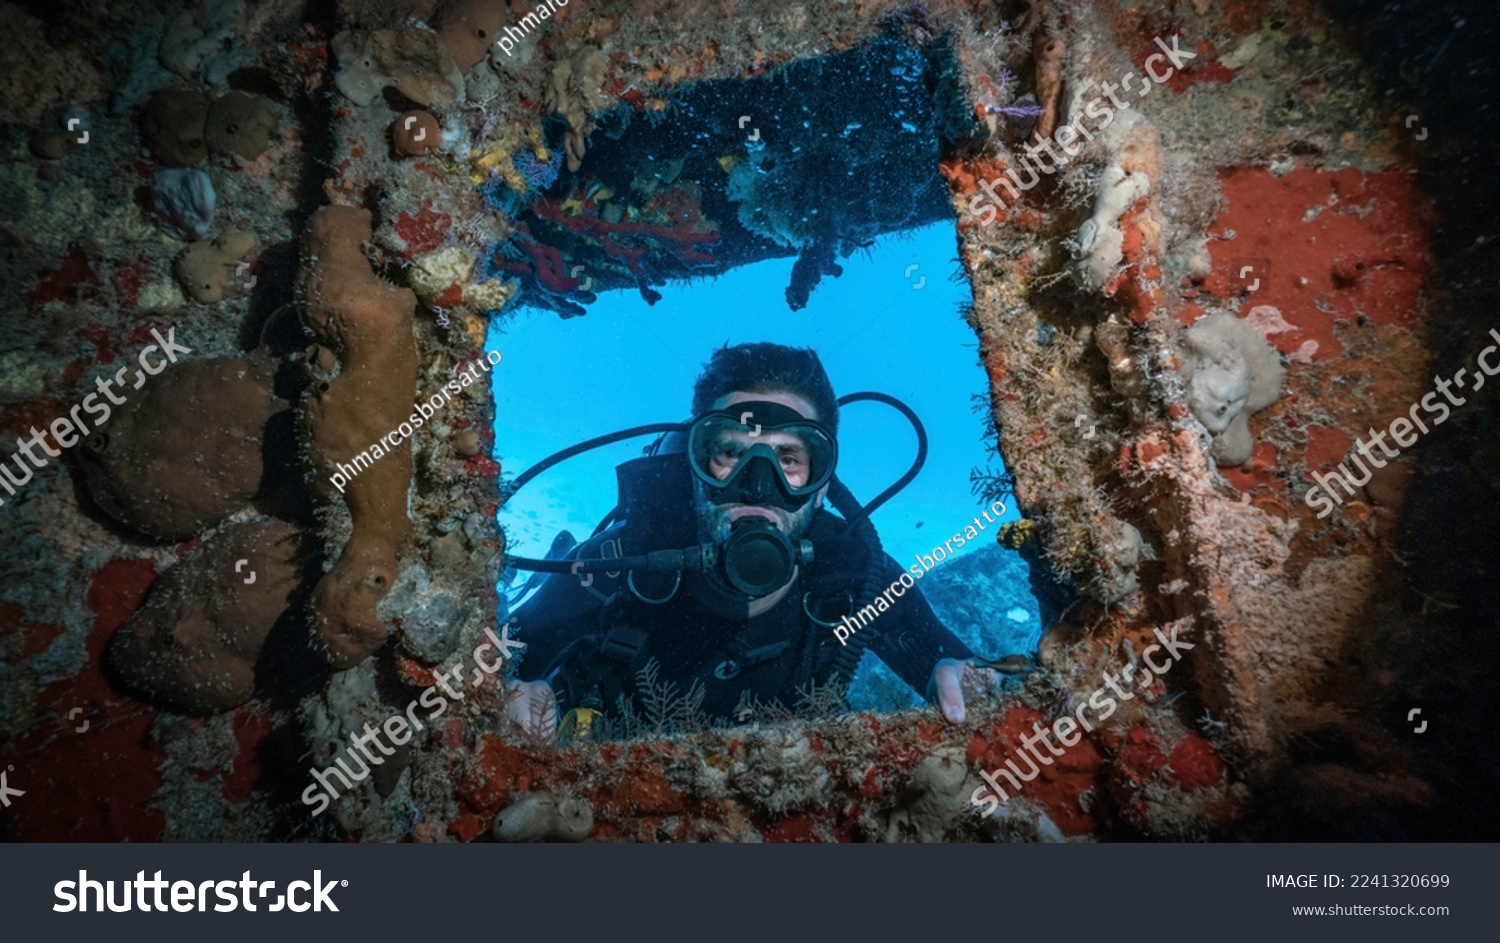 scuba diver posing in a window full of corals in a shipwreck #2241320699